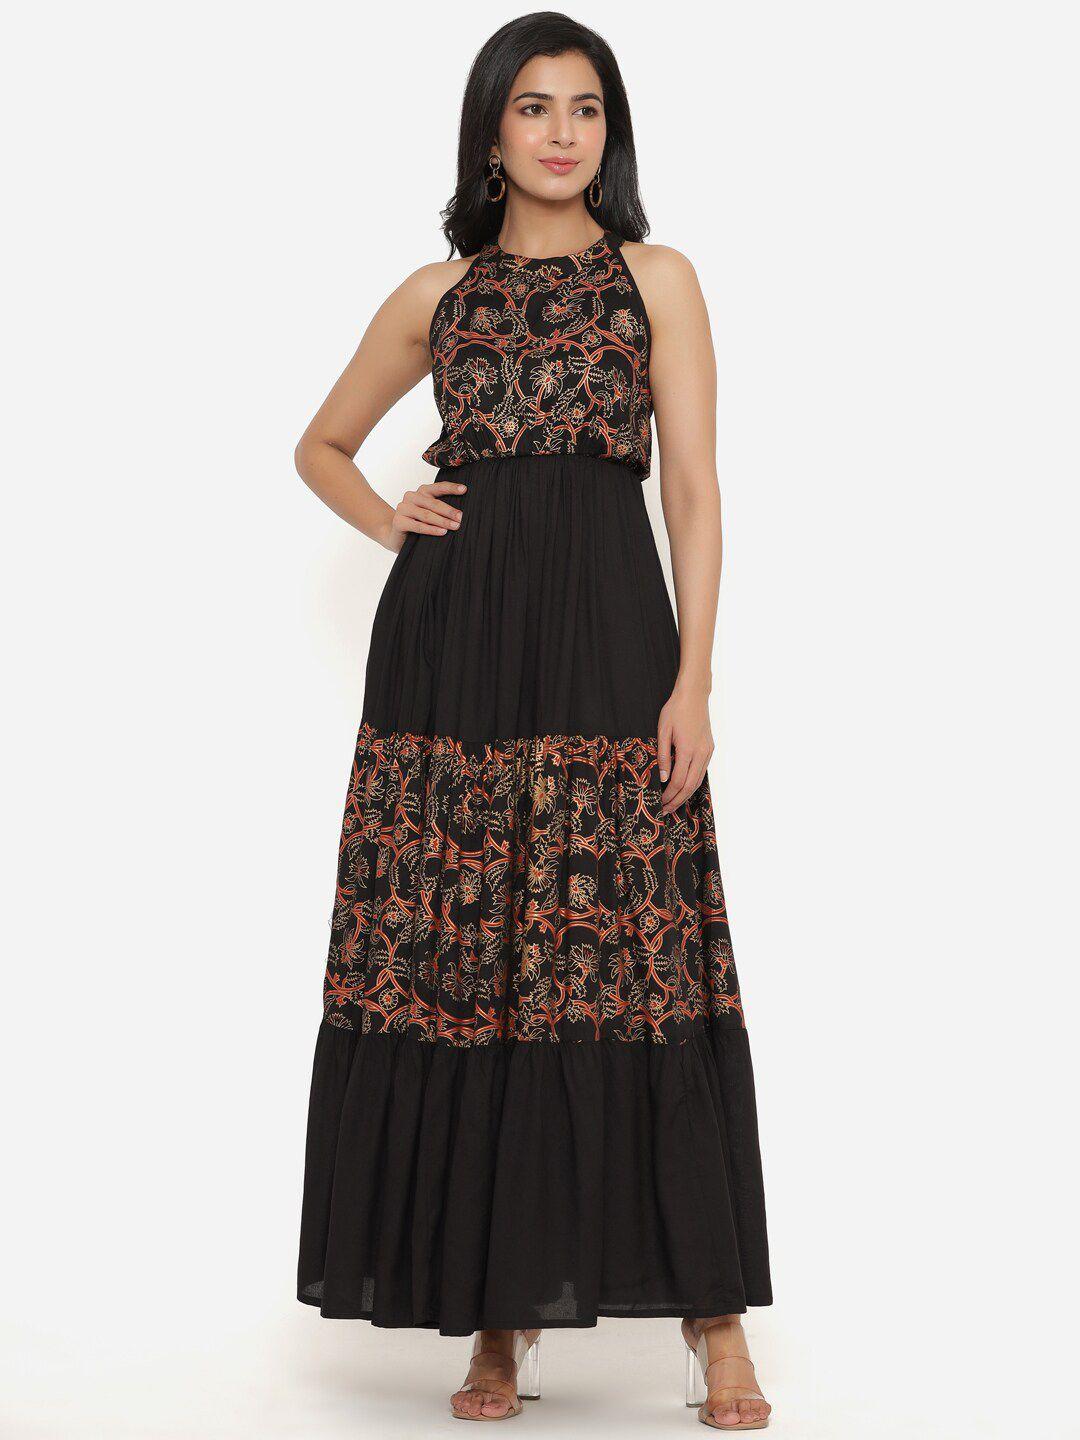 purshottam wala black ethnic motifs maxi dress